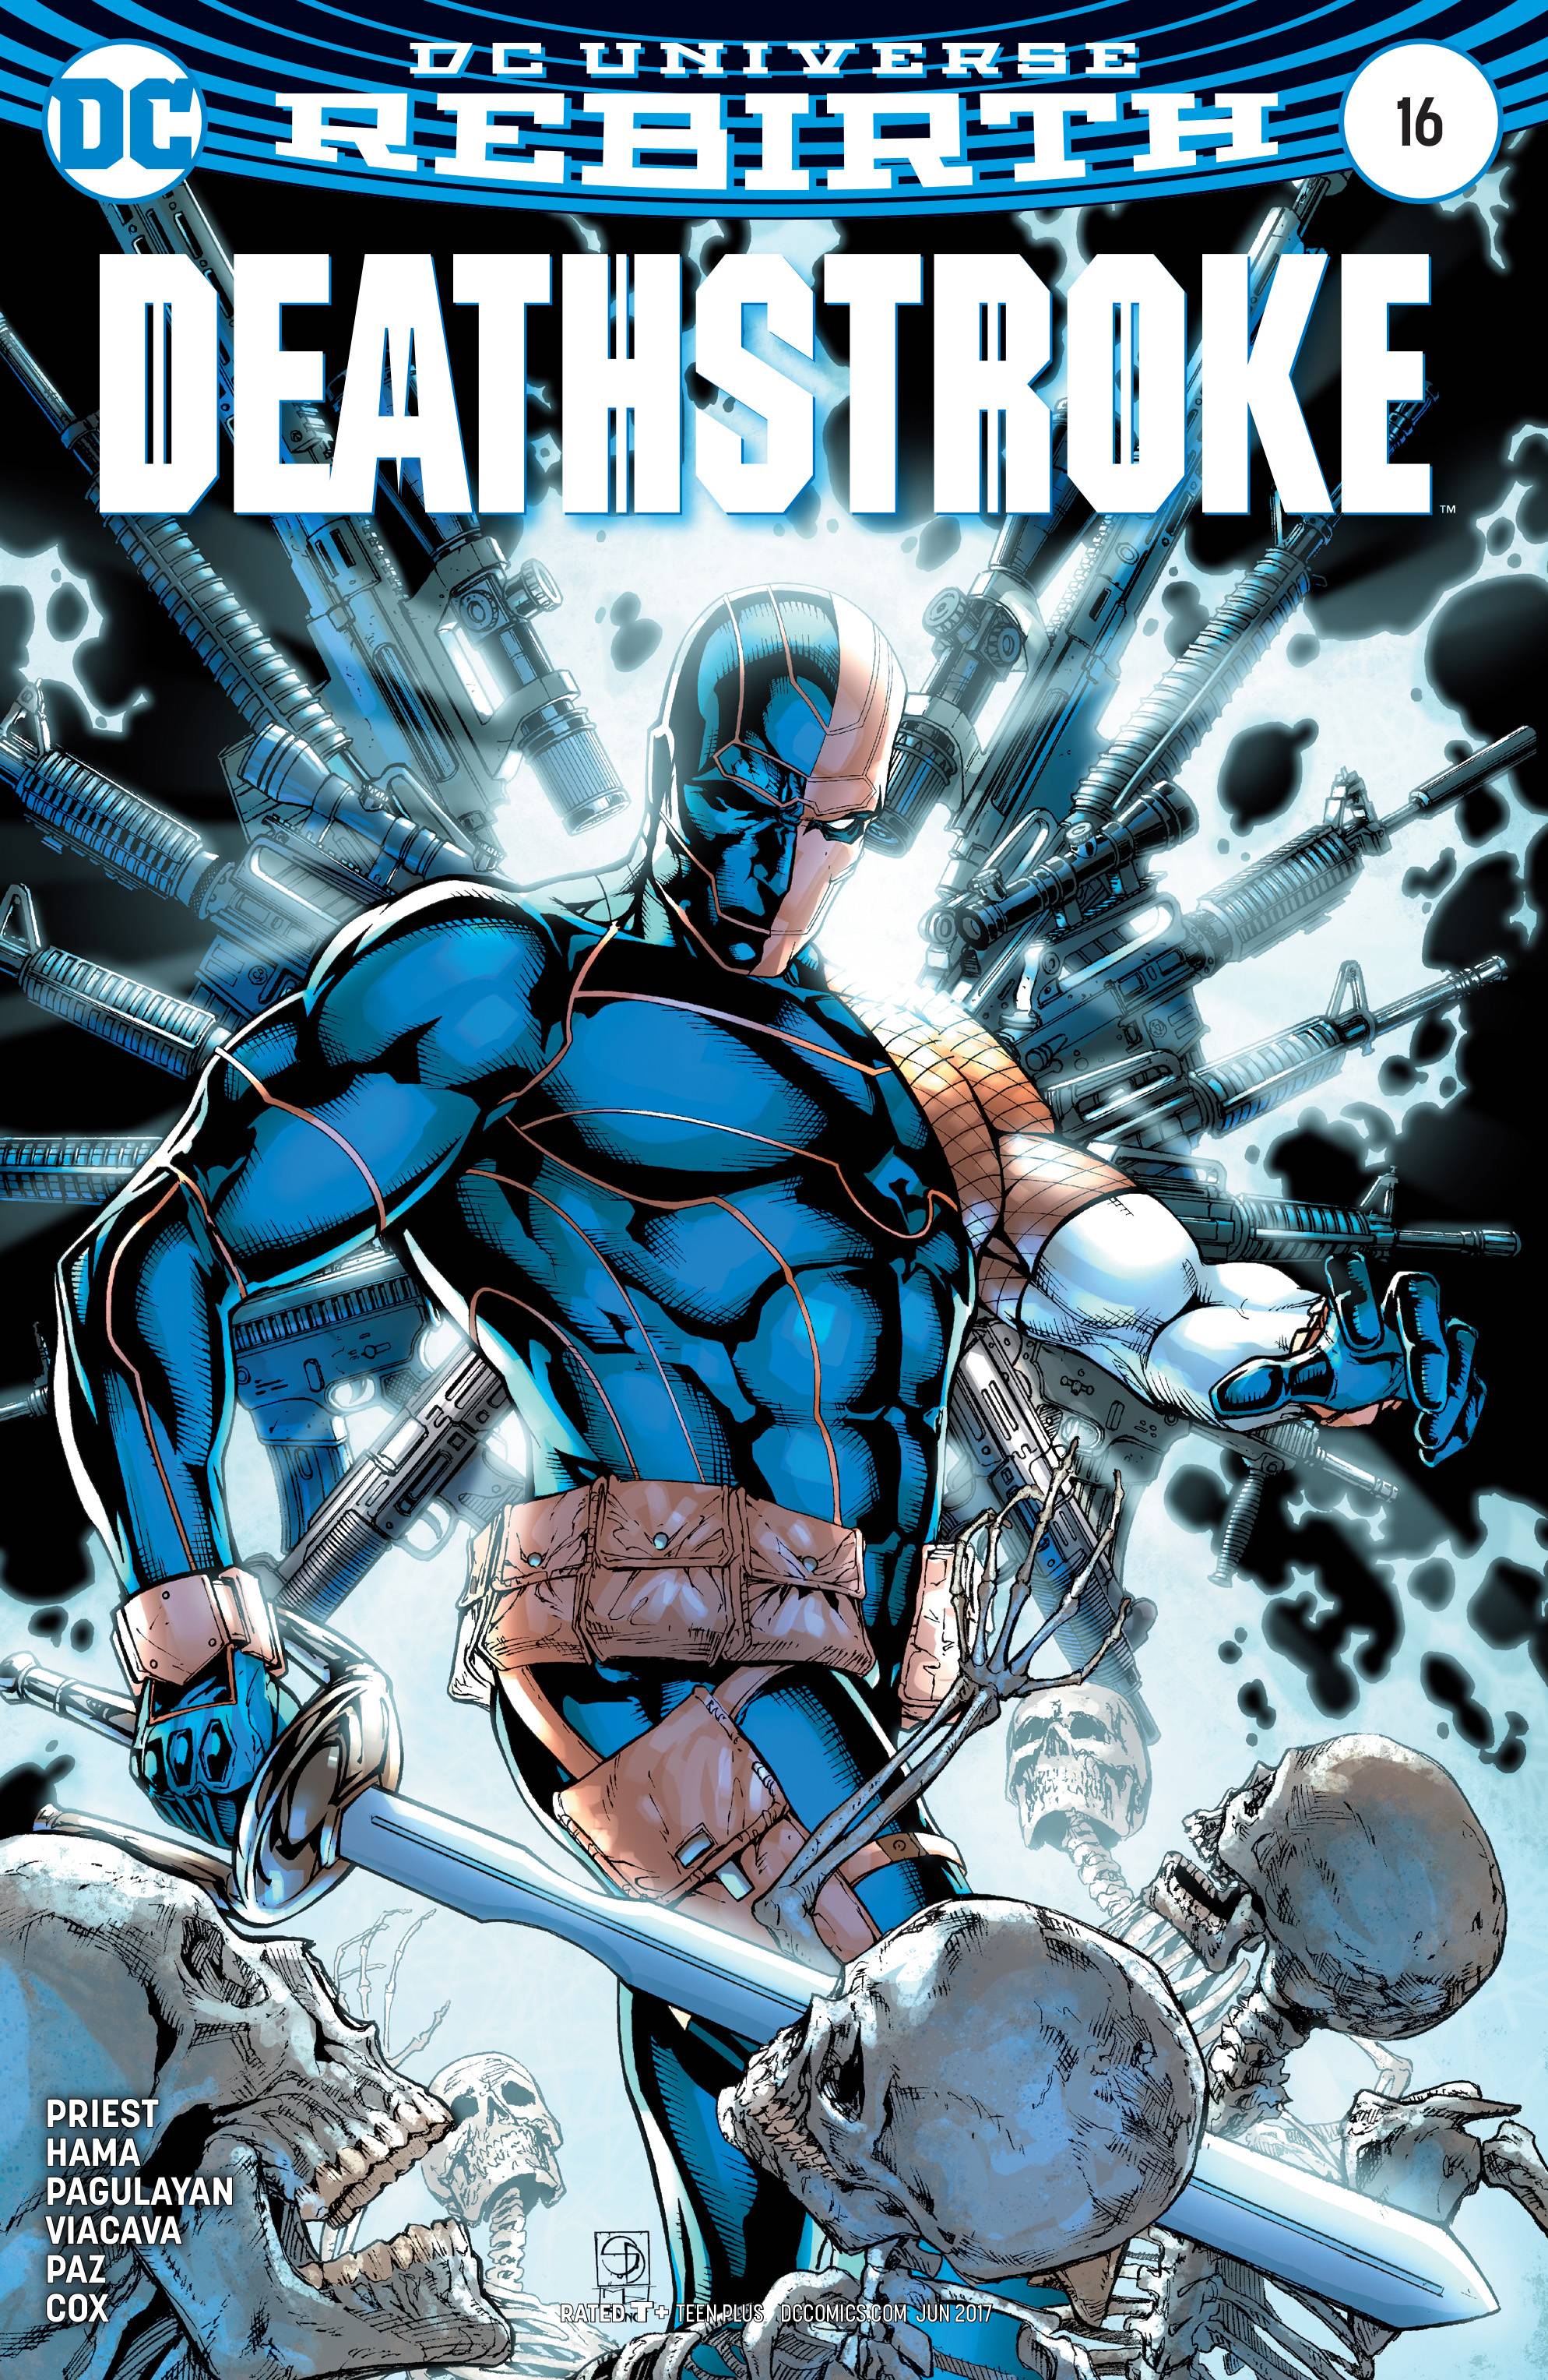 Deathstroke #16 Variant Edition (2016)